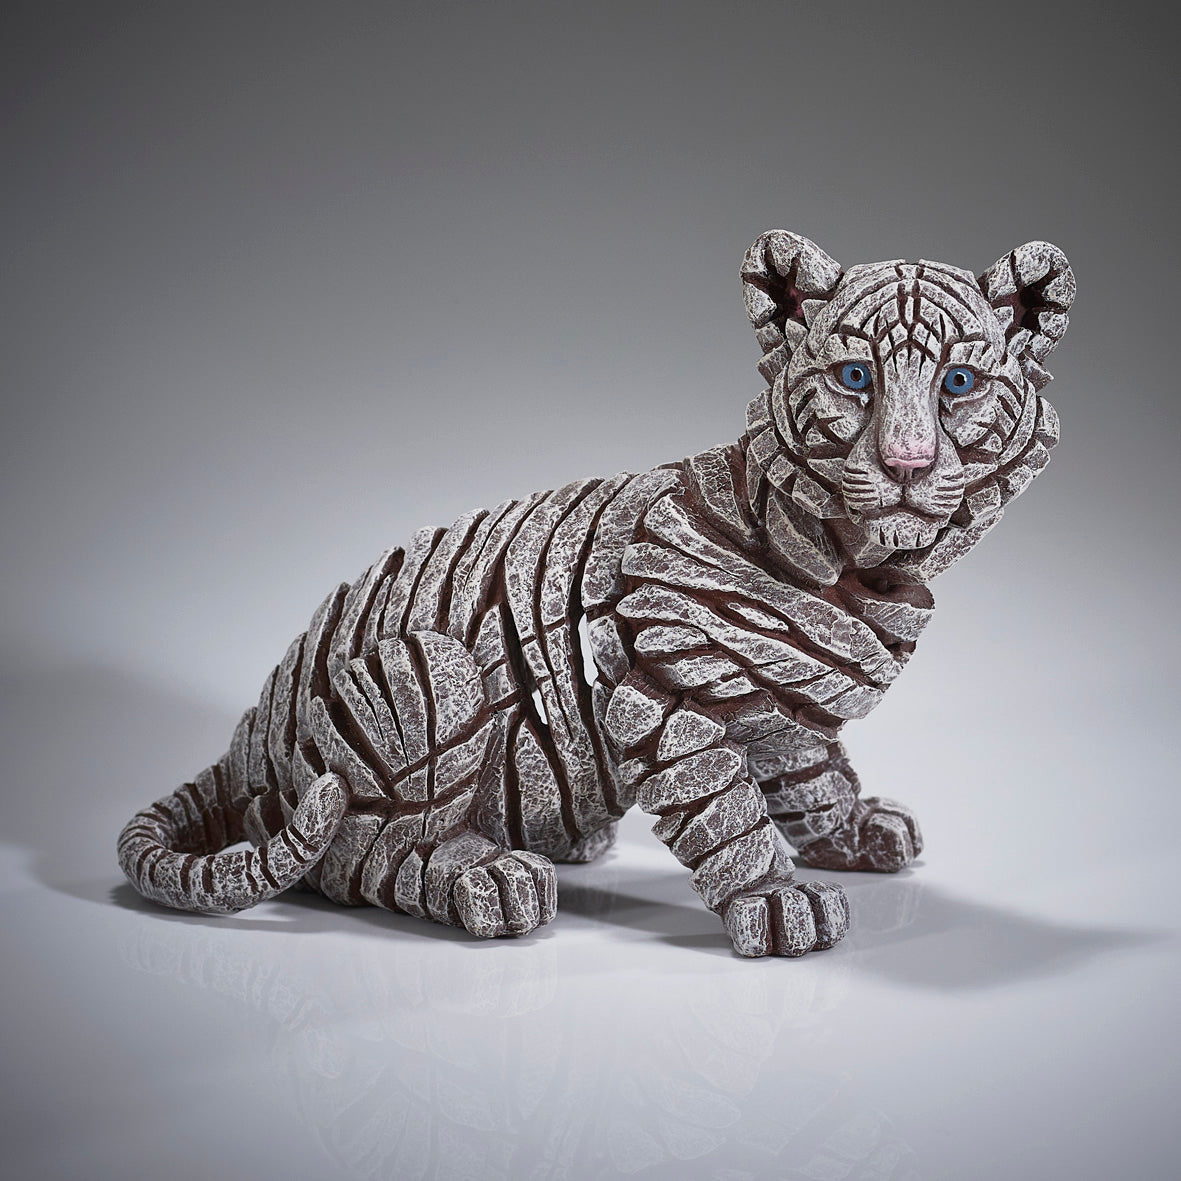 Tiger Cub Siberian from Edge Sculpture by Matt Buckley